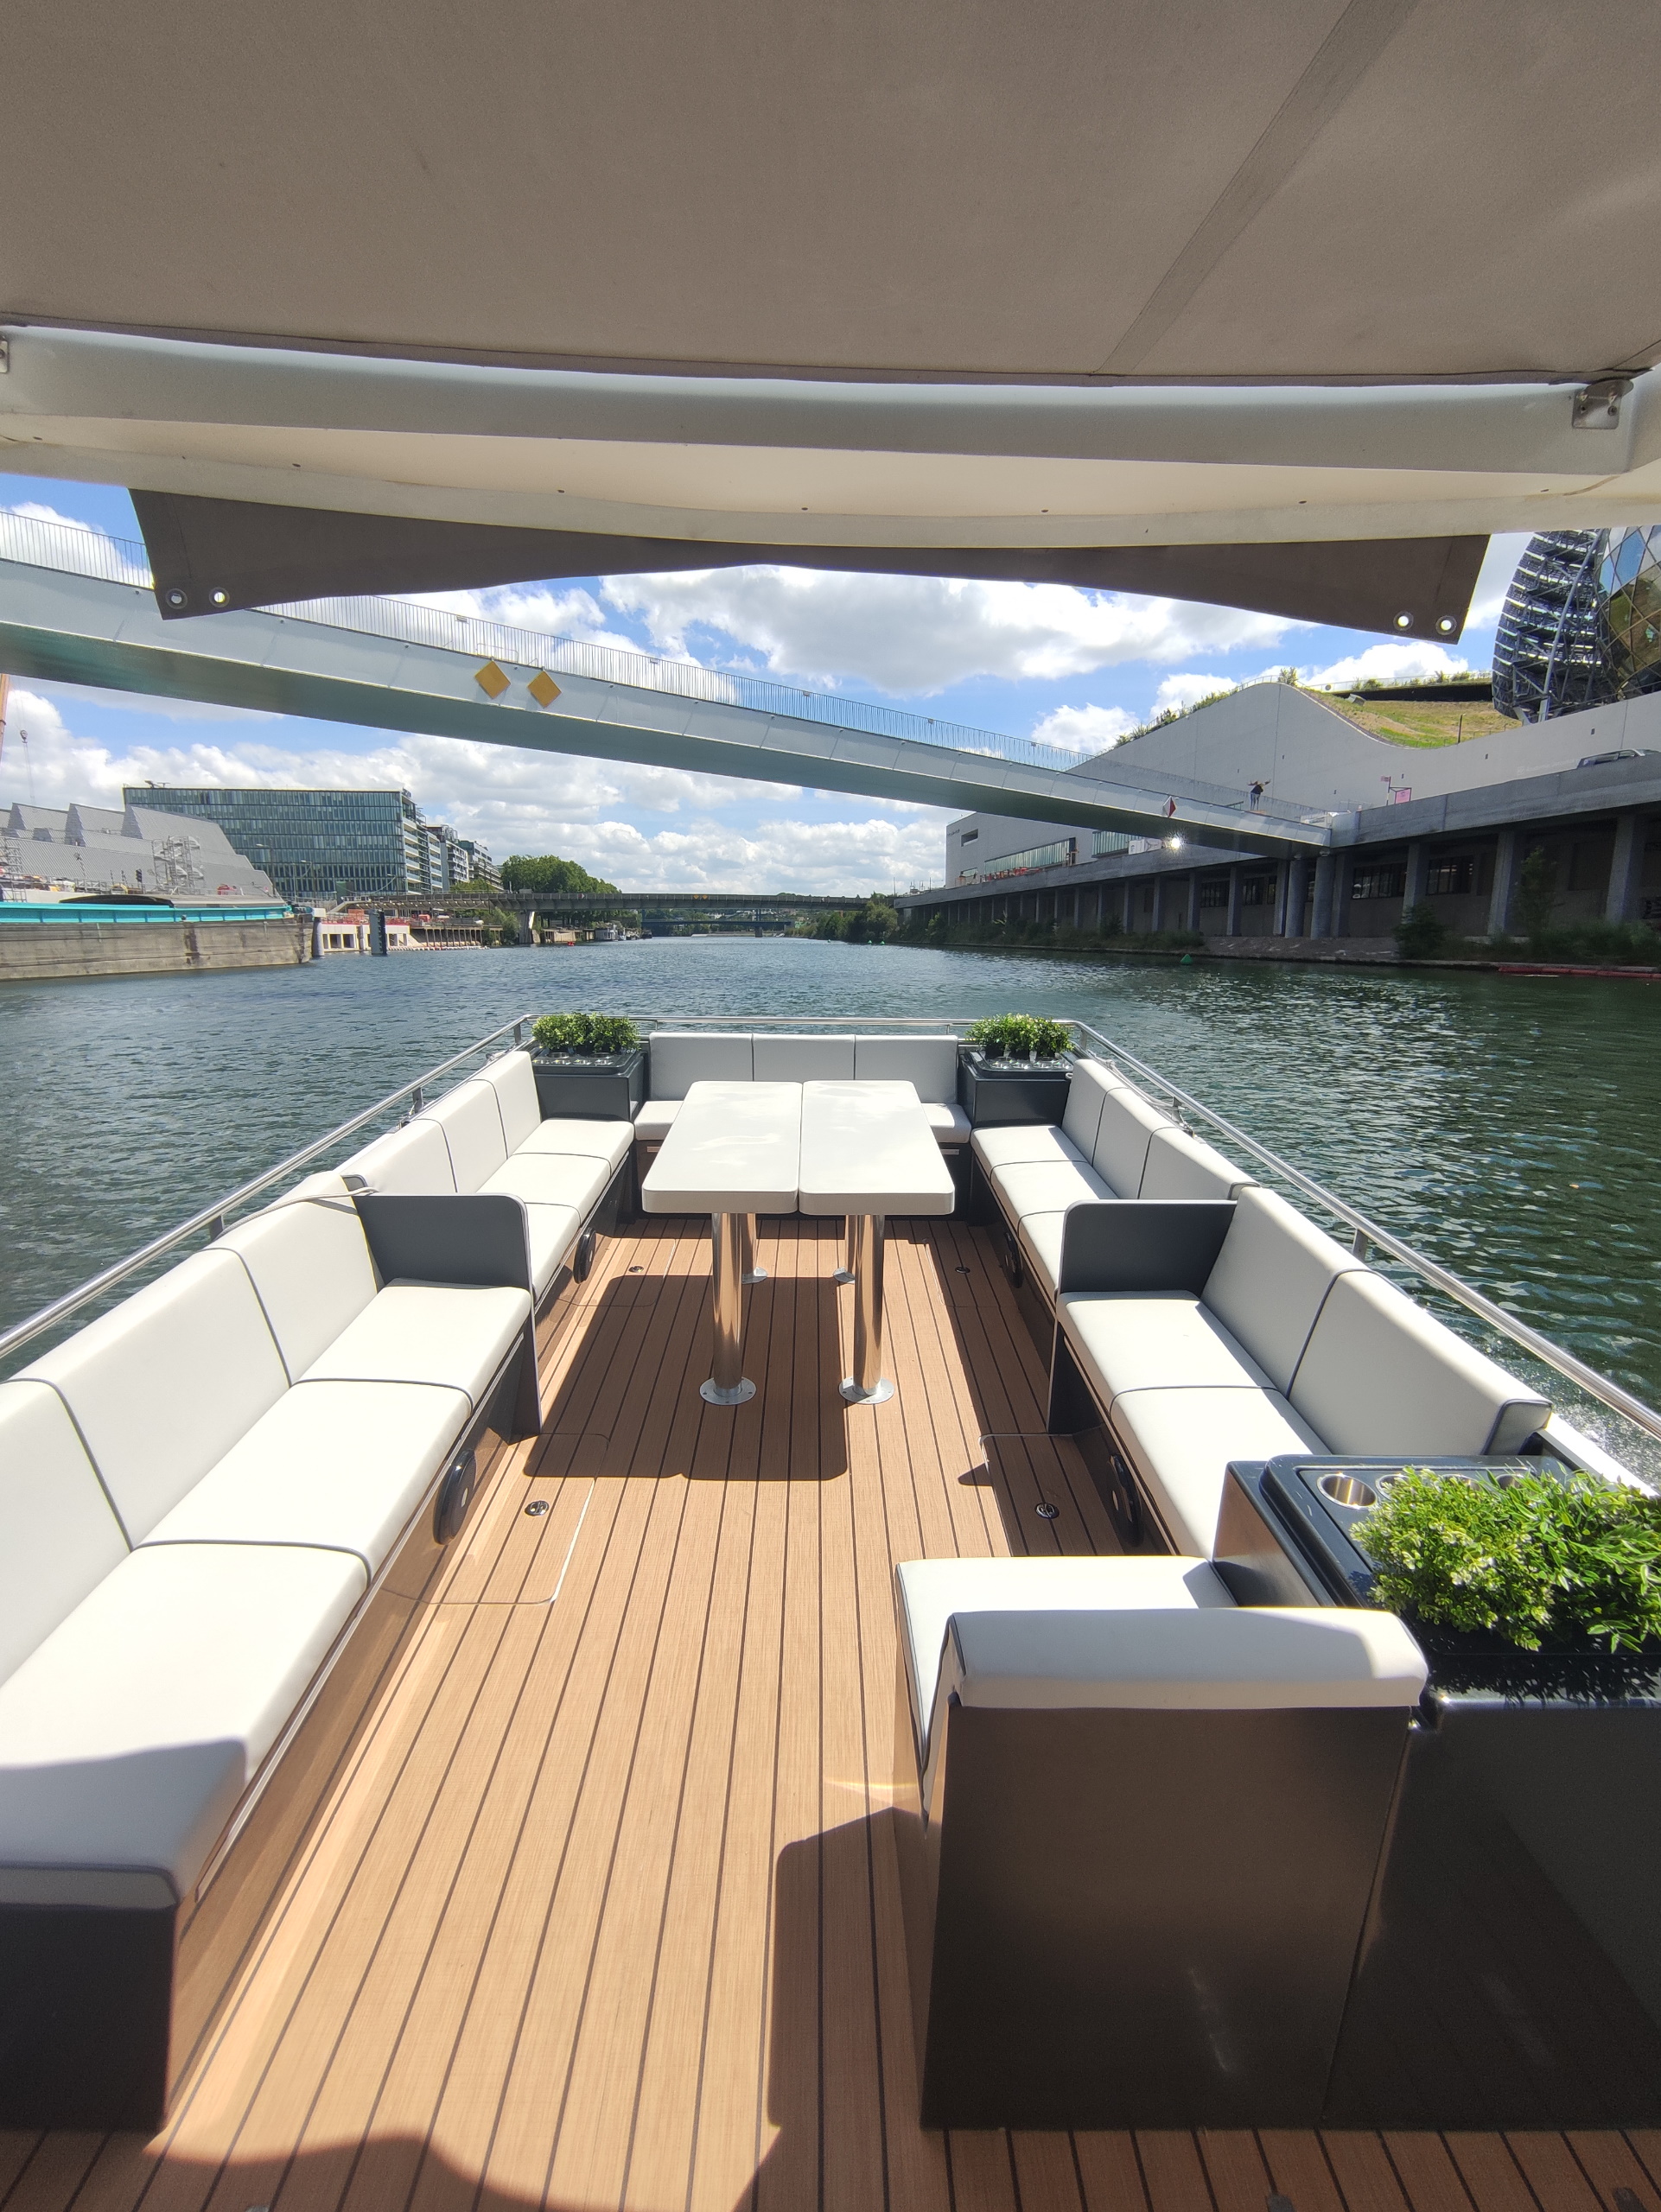 Deck view Riverlounge Luxury Pontoon Boat - Private Boat Tour in Paris - Boat in Paris